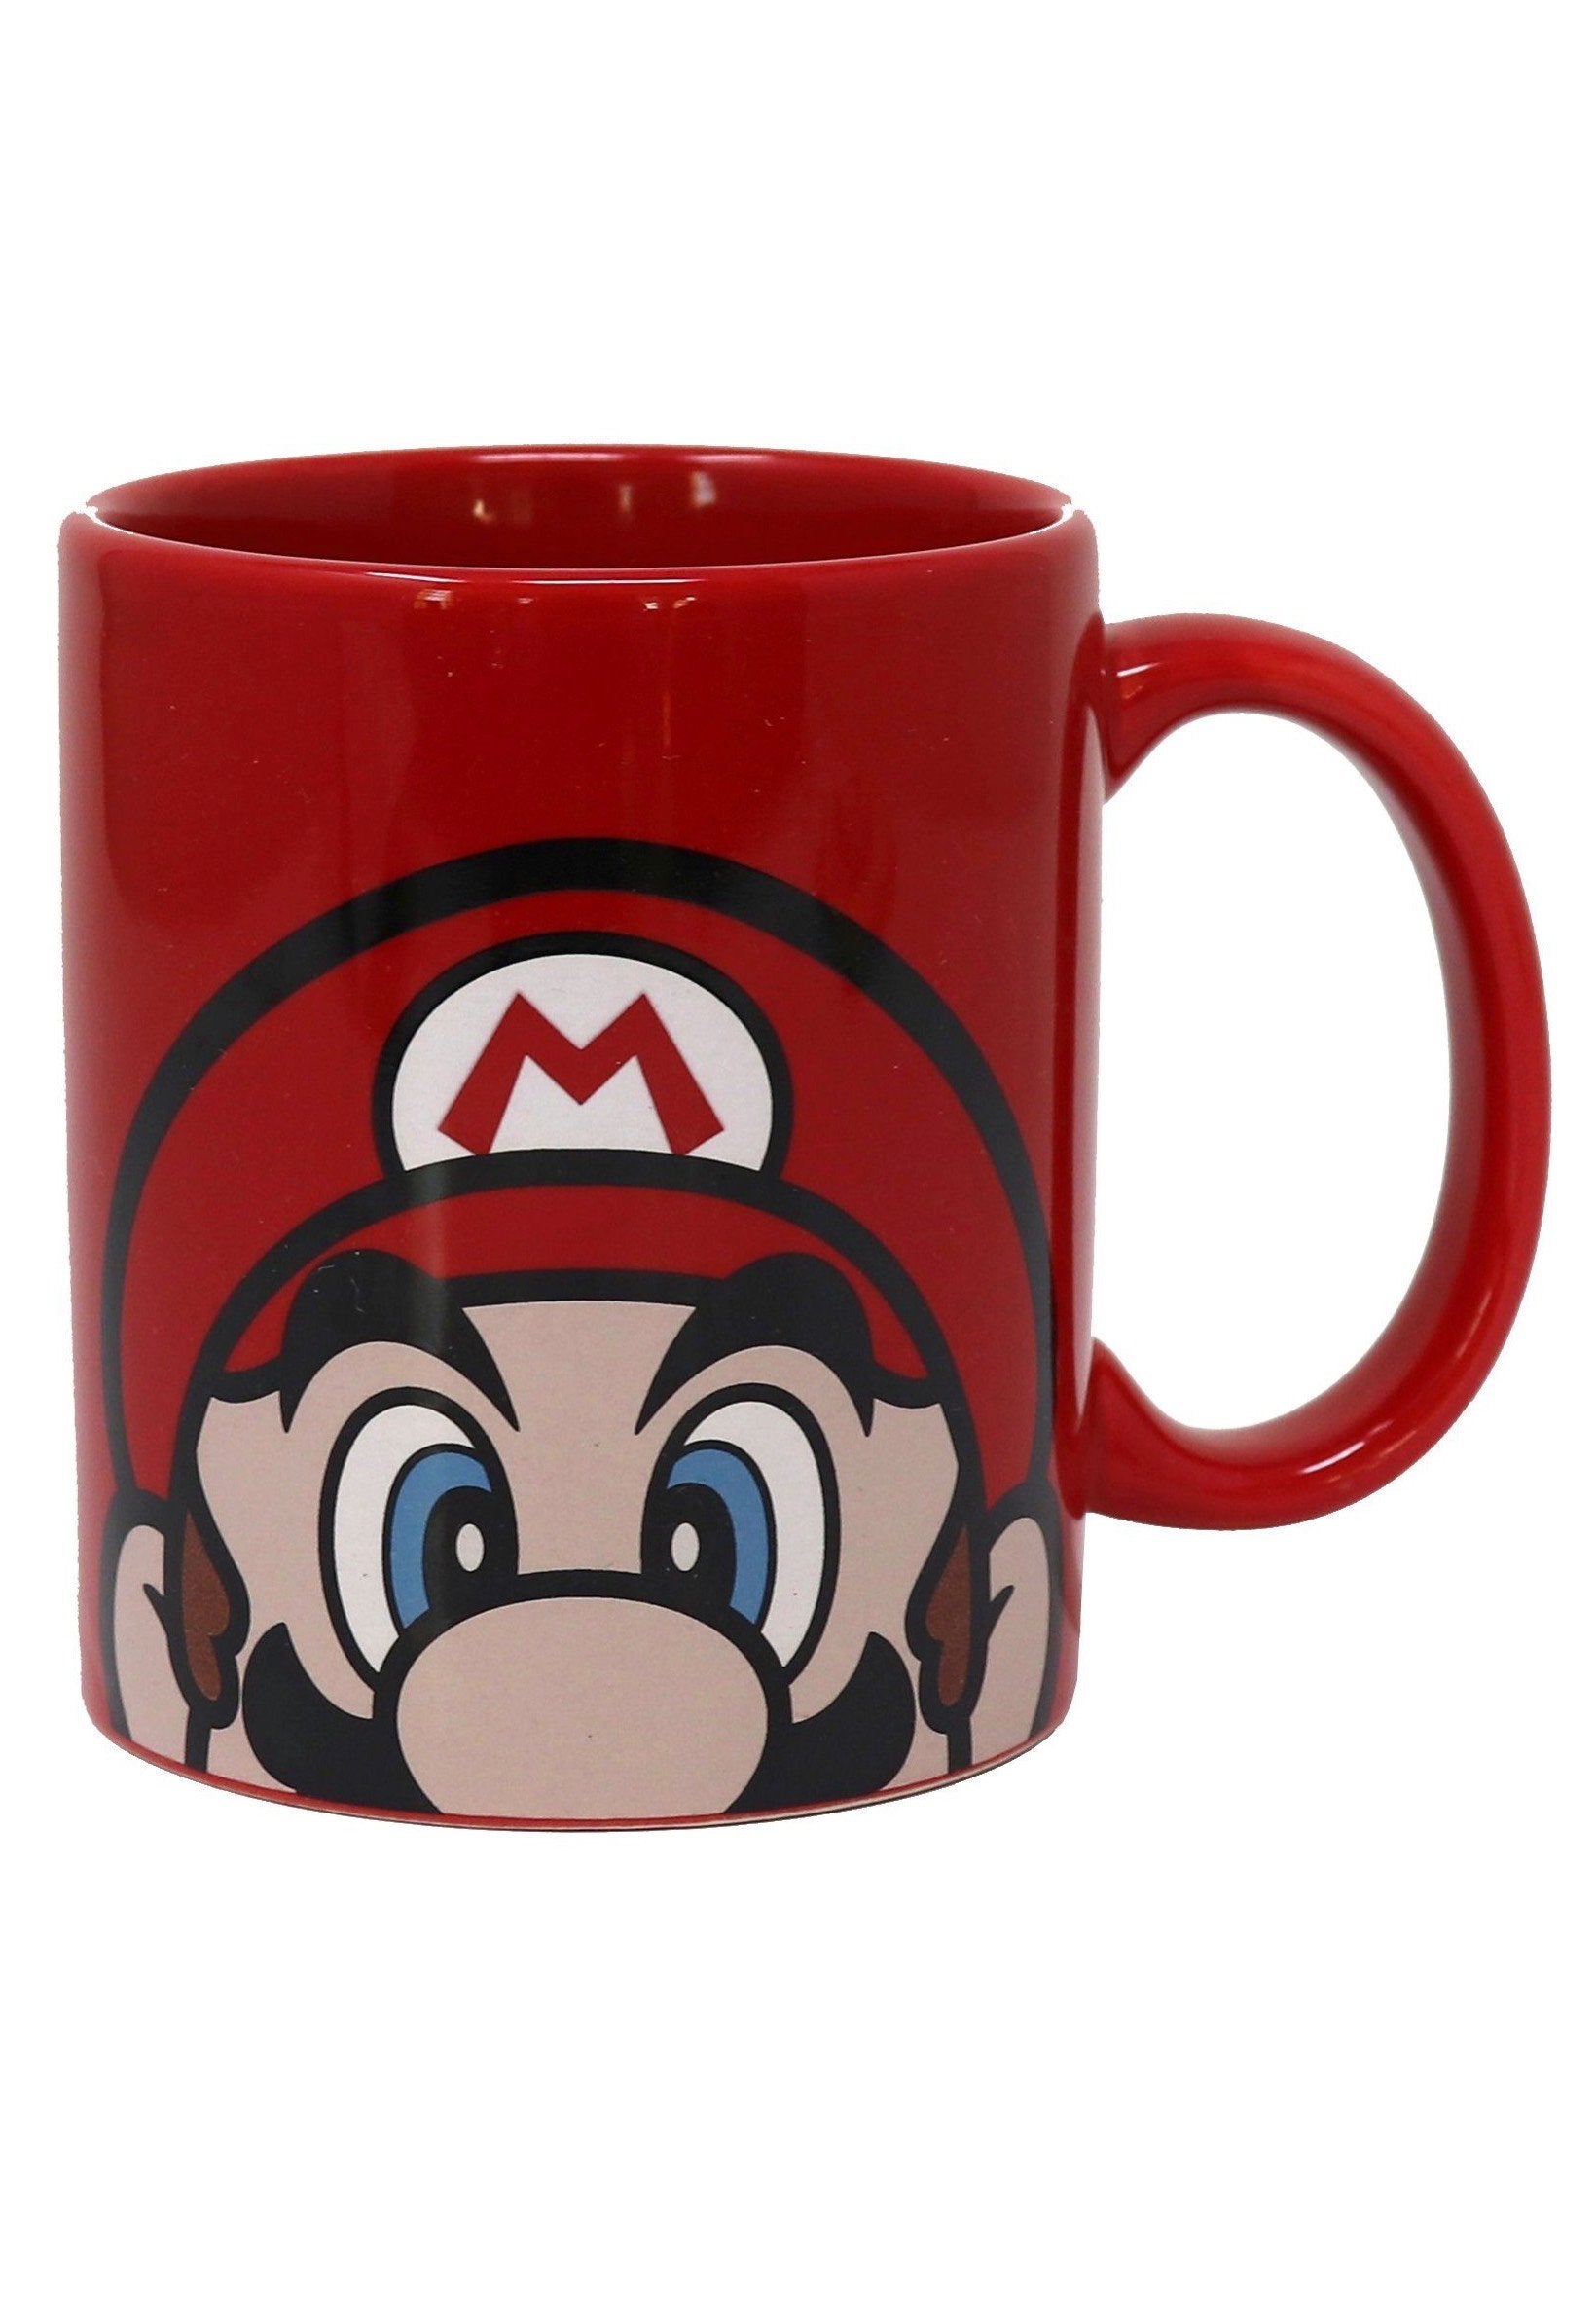 Super Mario - Mario - Gift Box